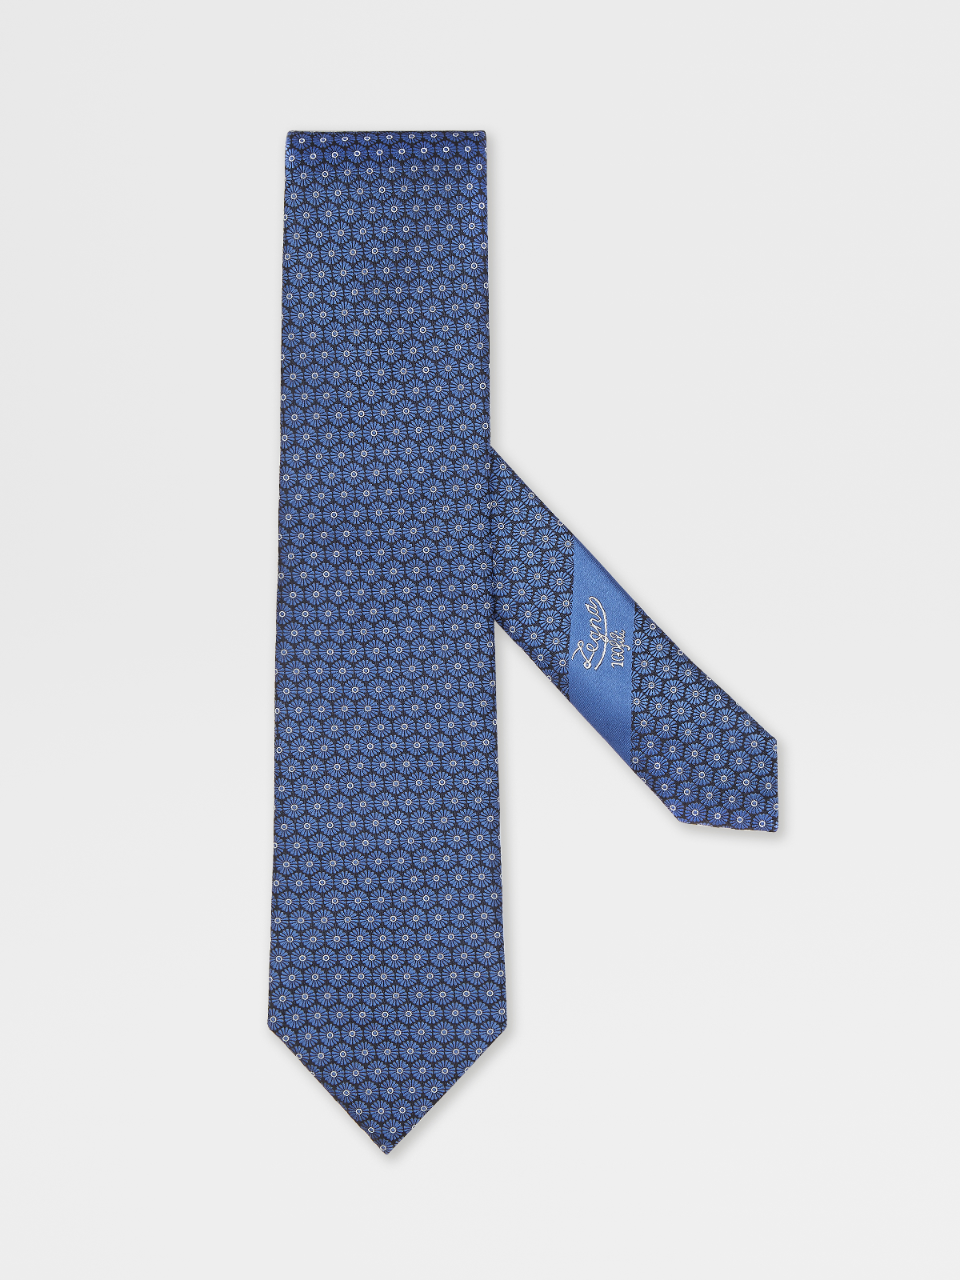 Medium Blue 100fili Silk Tie